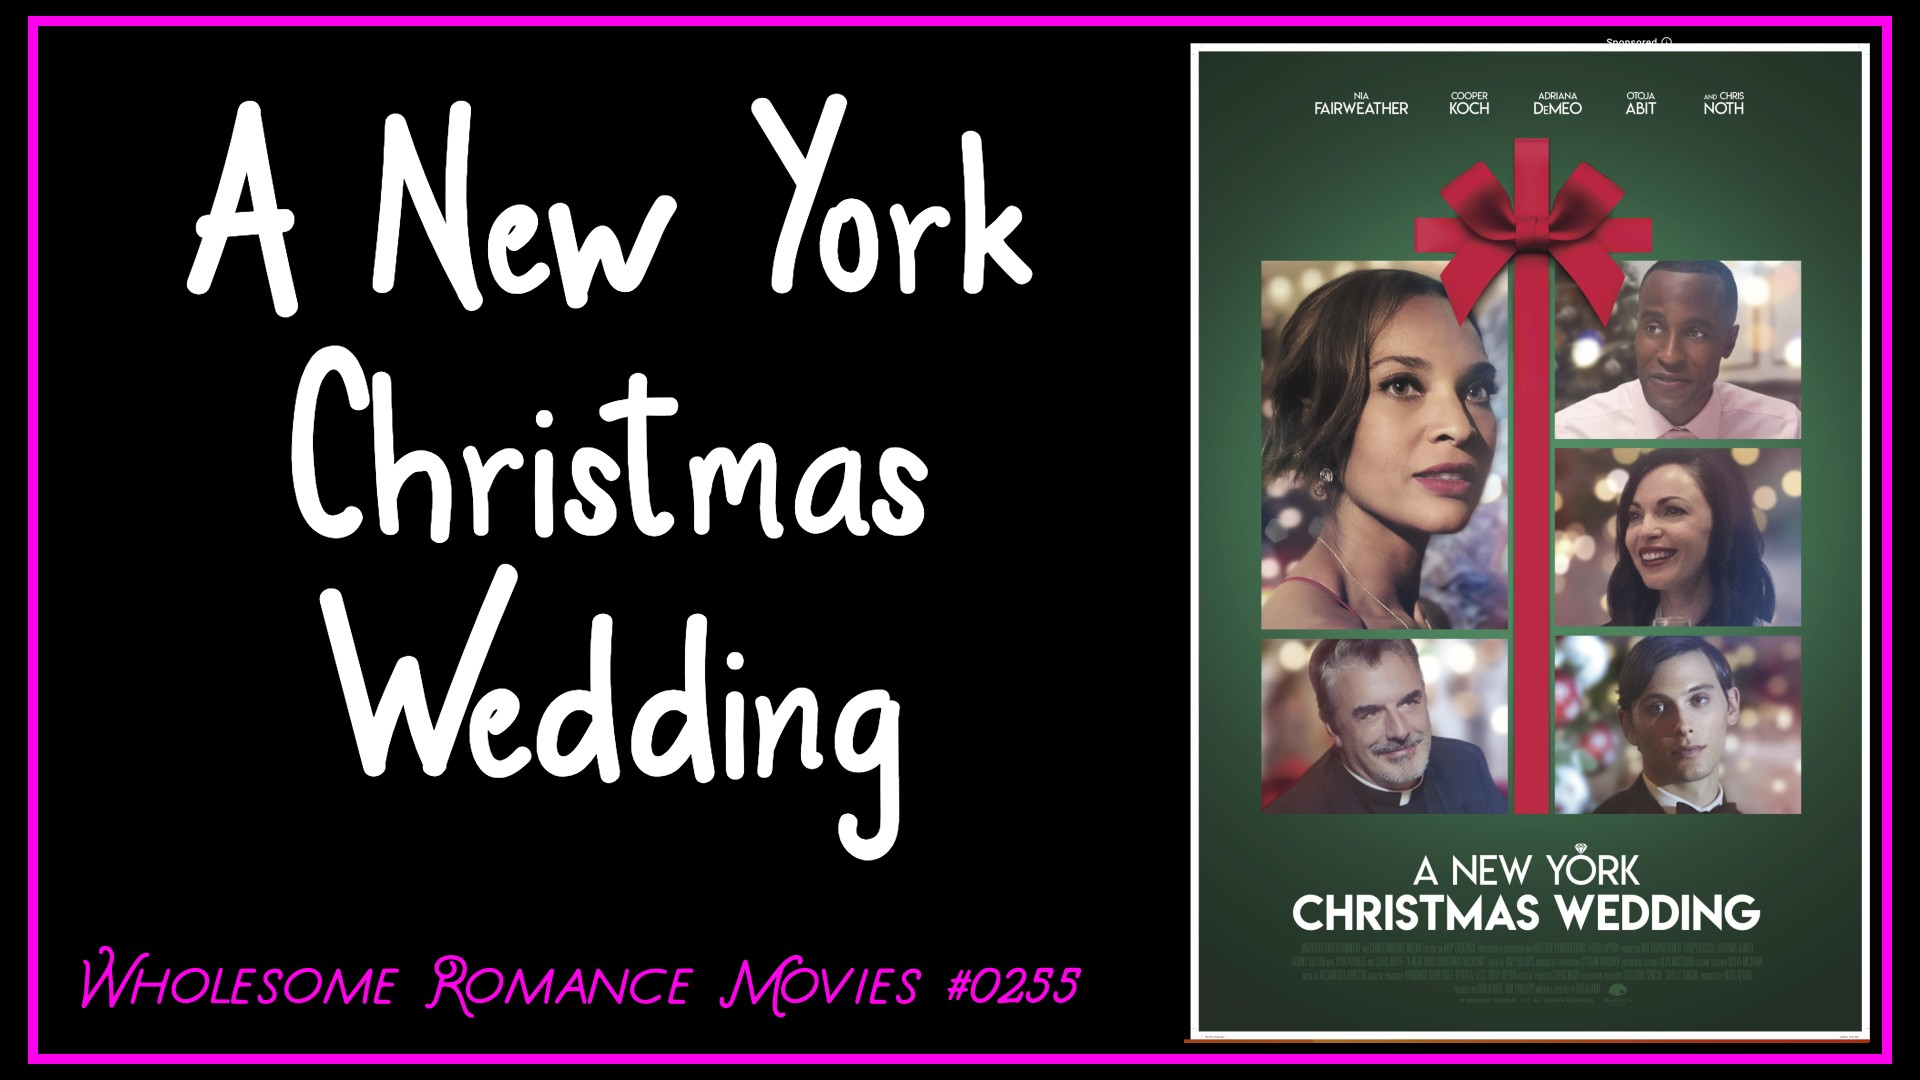 A New York Christmas Wedding (2020) WRM Review